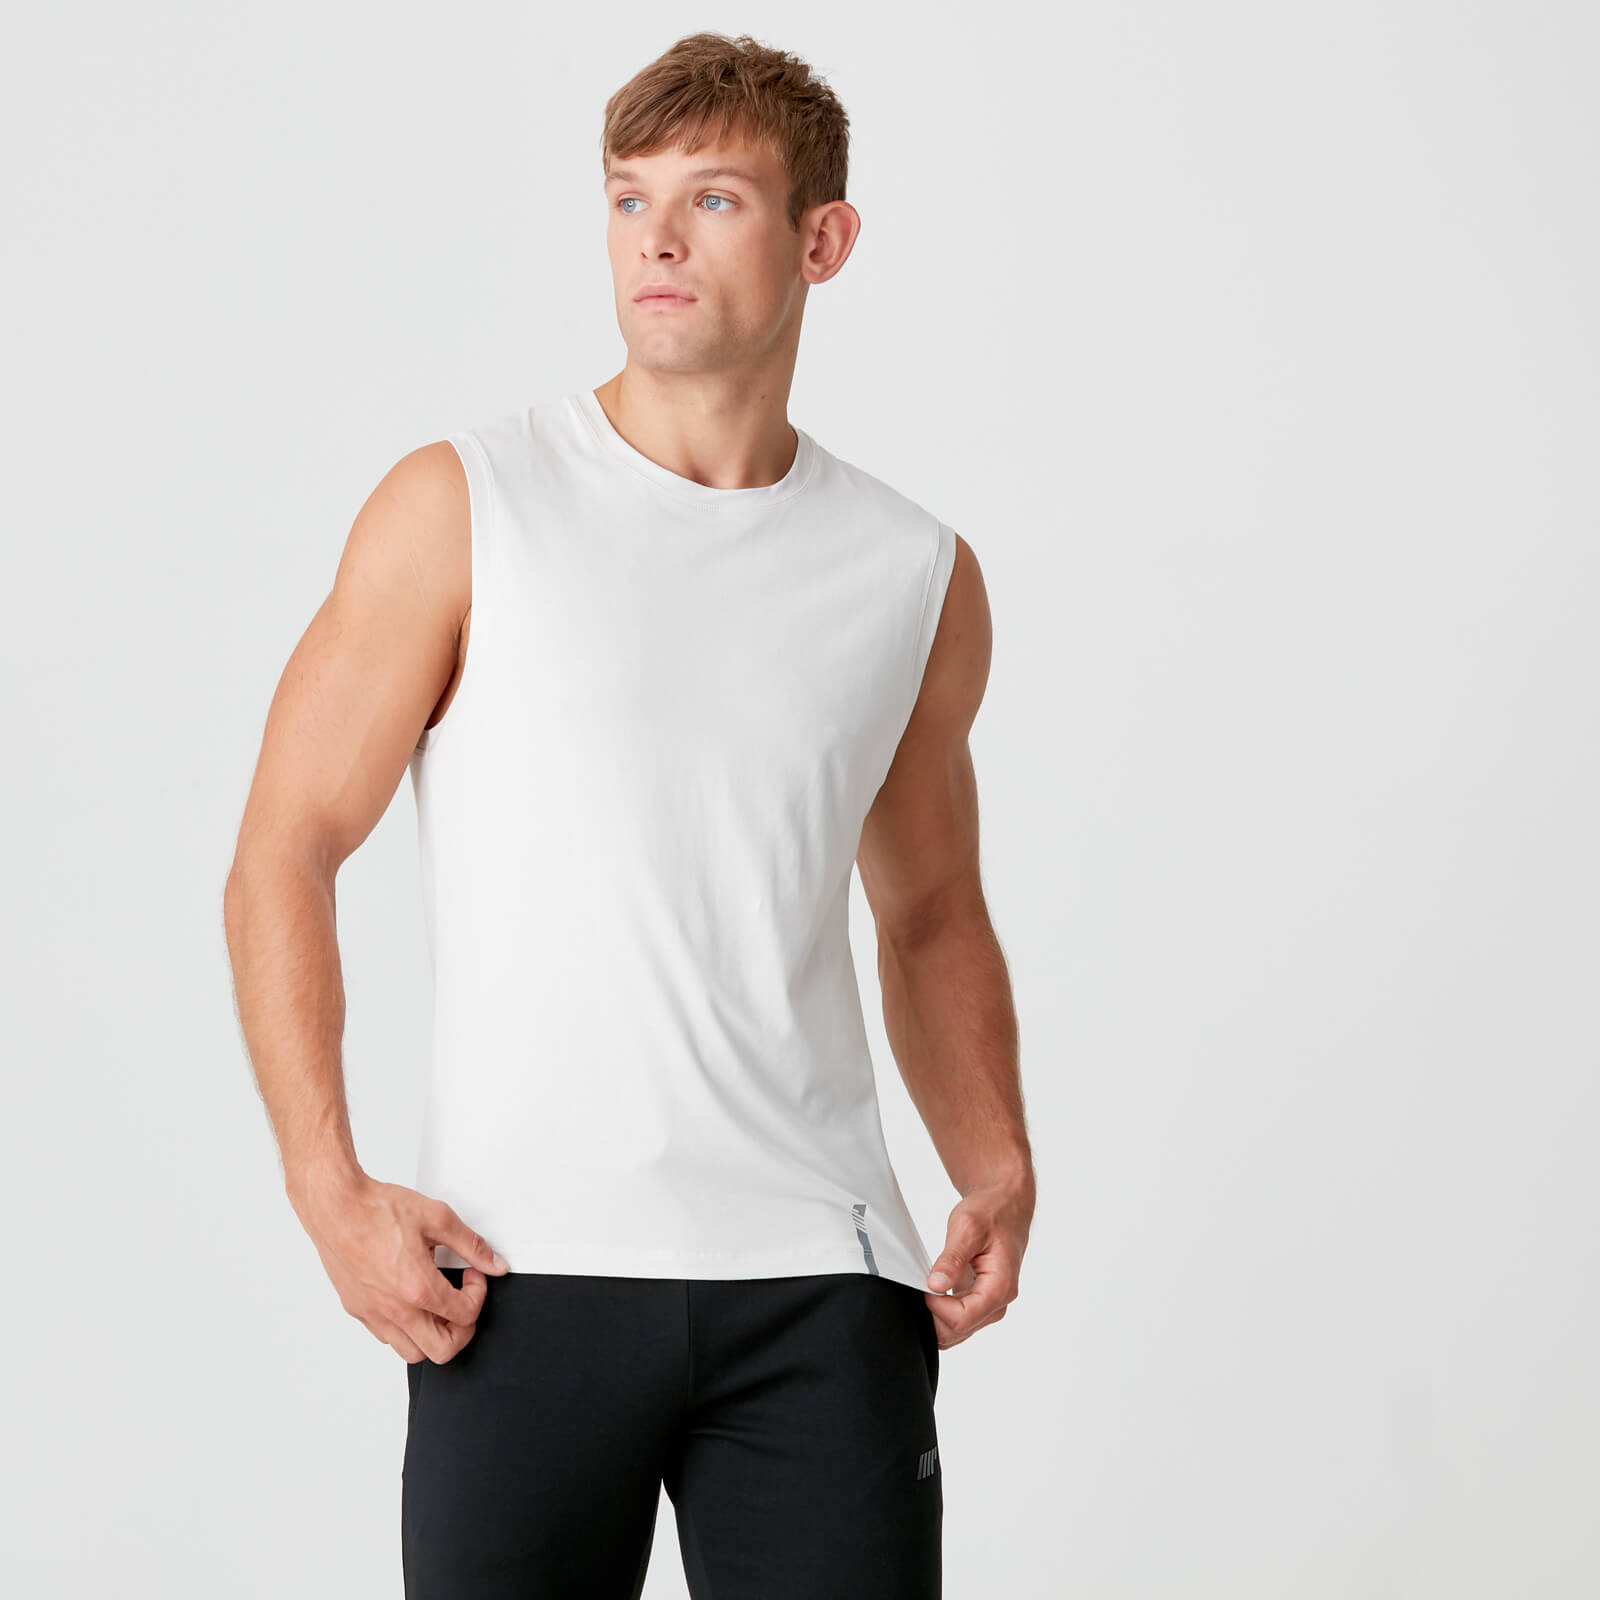 Luxe Classic Sleeveless T-Shirt - Chalk - XS